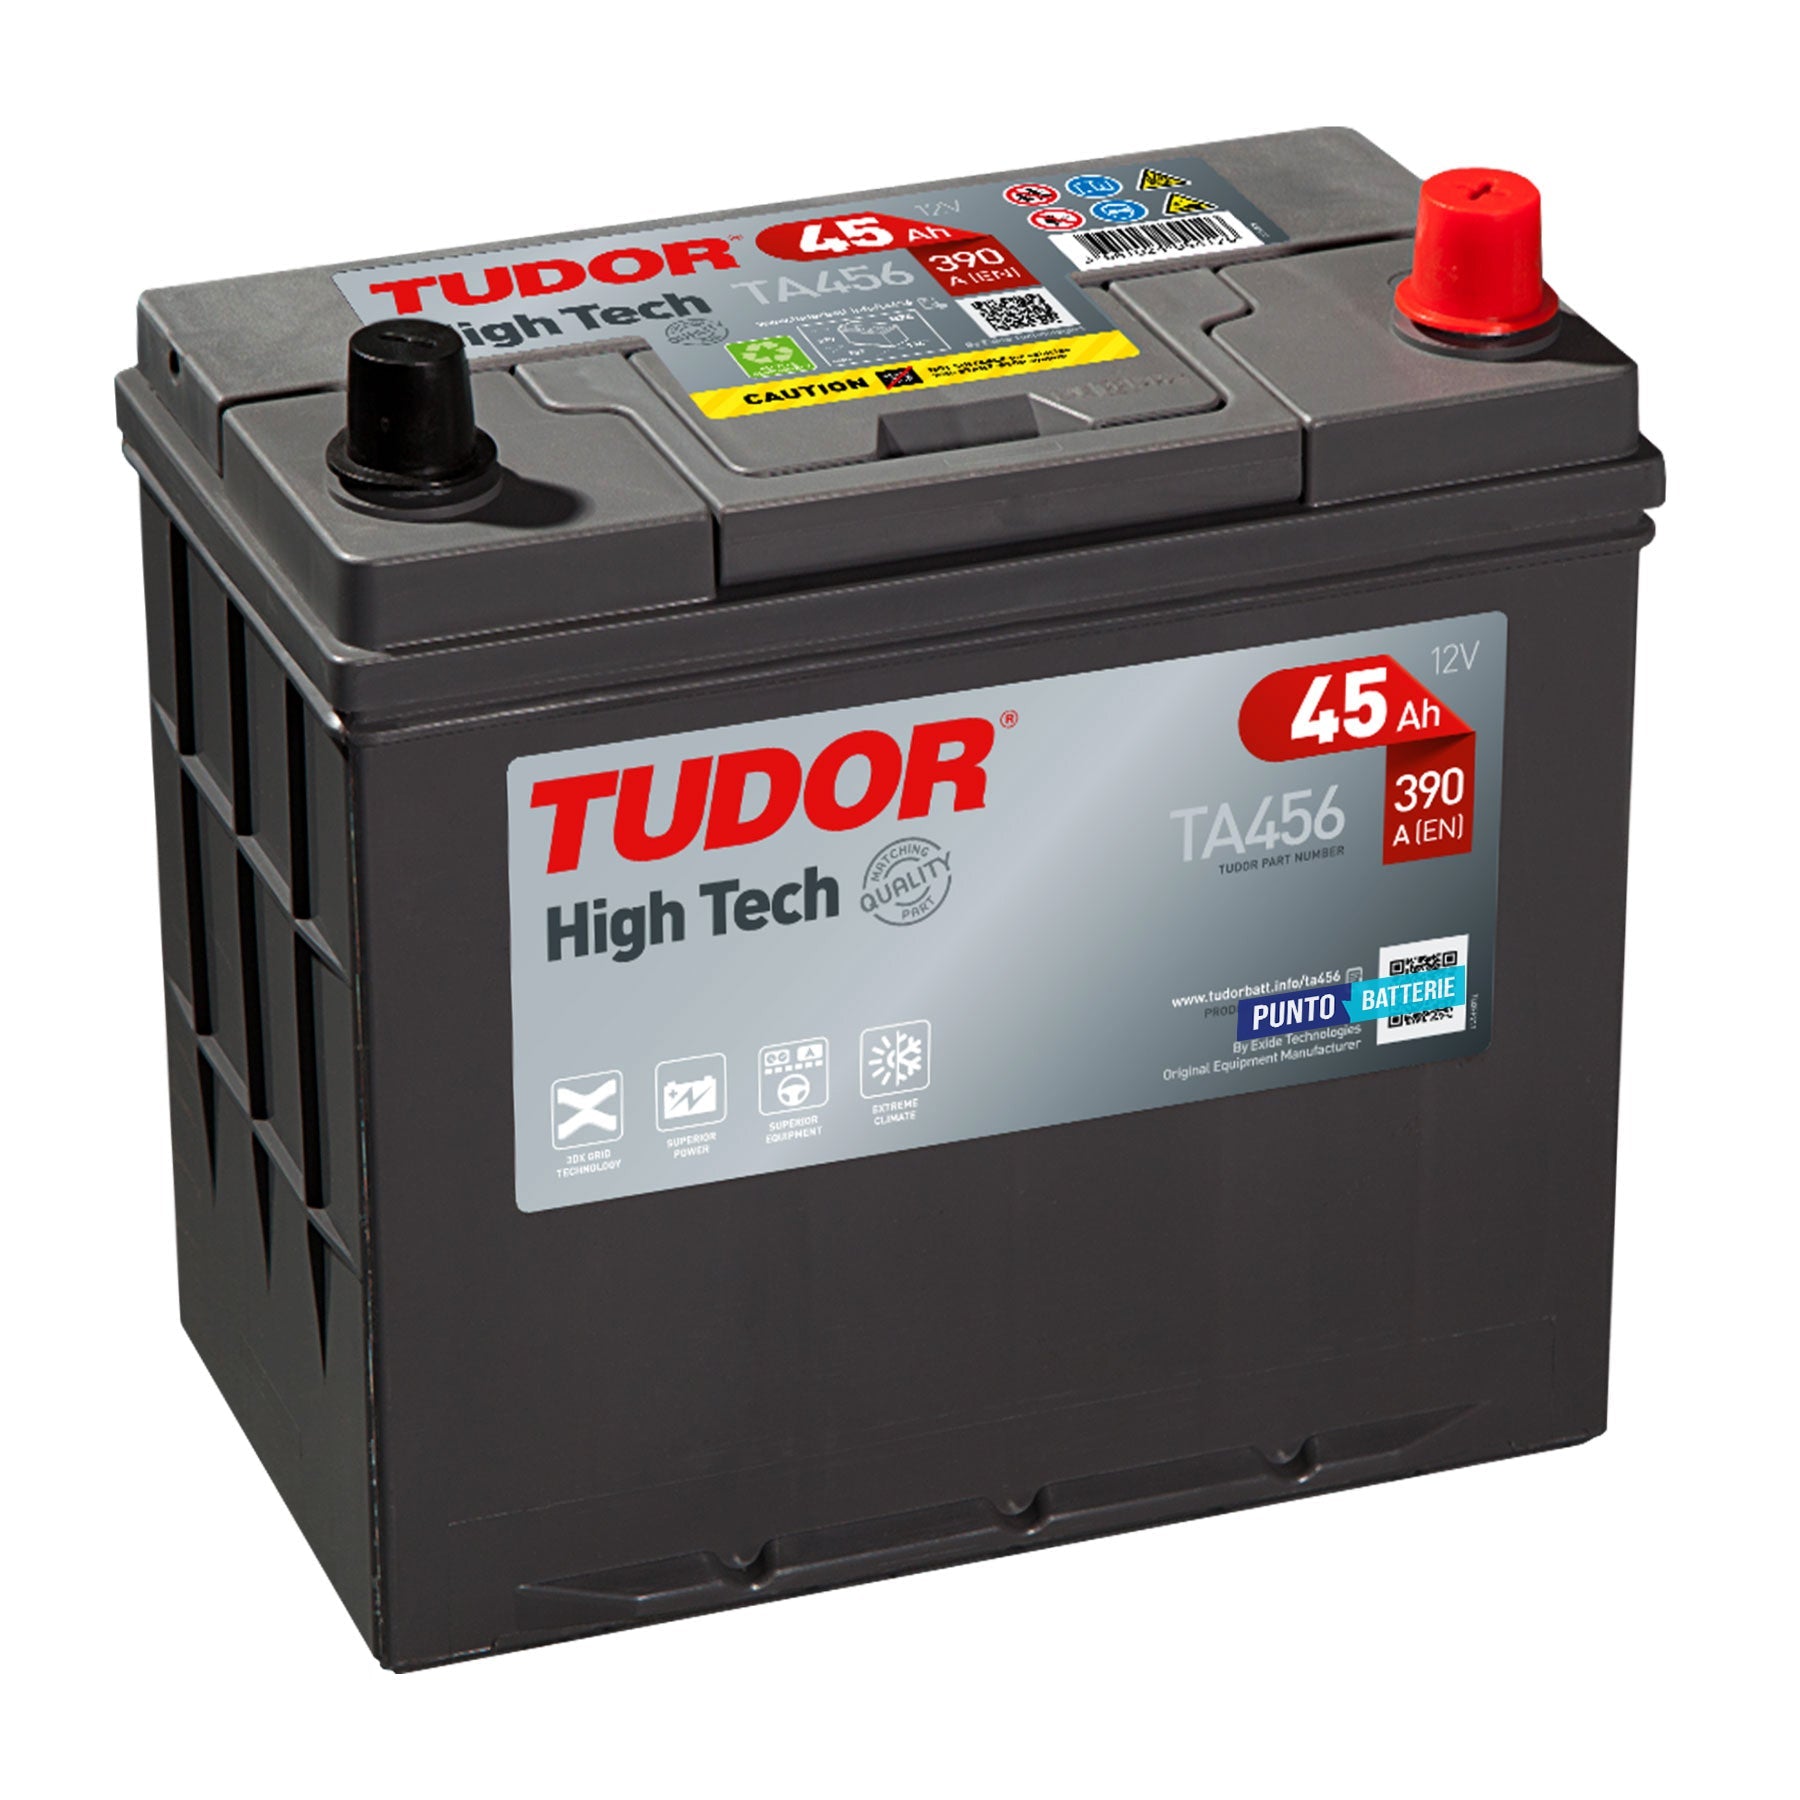 Batteria Tudor TA456 - High Tech (12V, 45Ah, 390A) - Puntobatterie